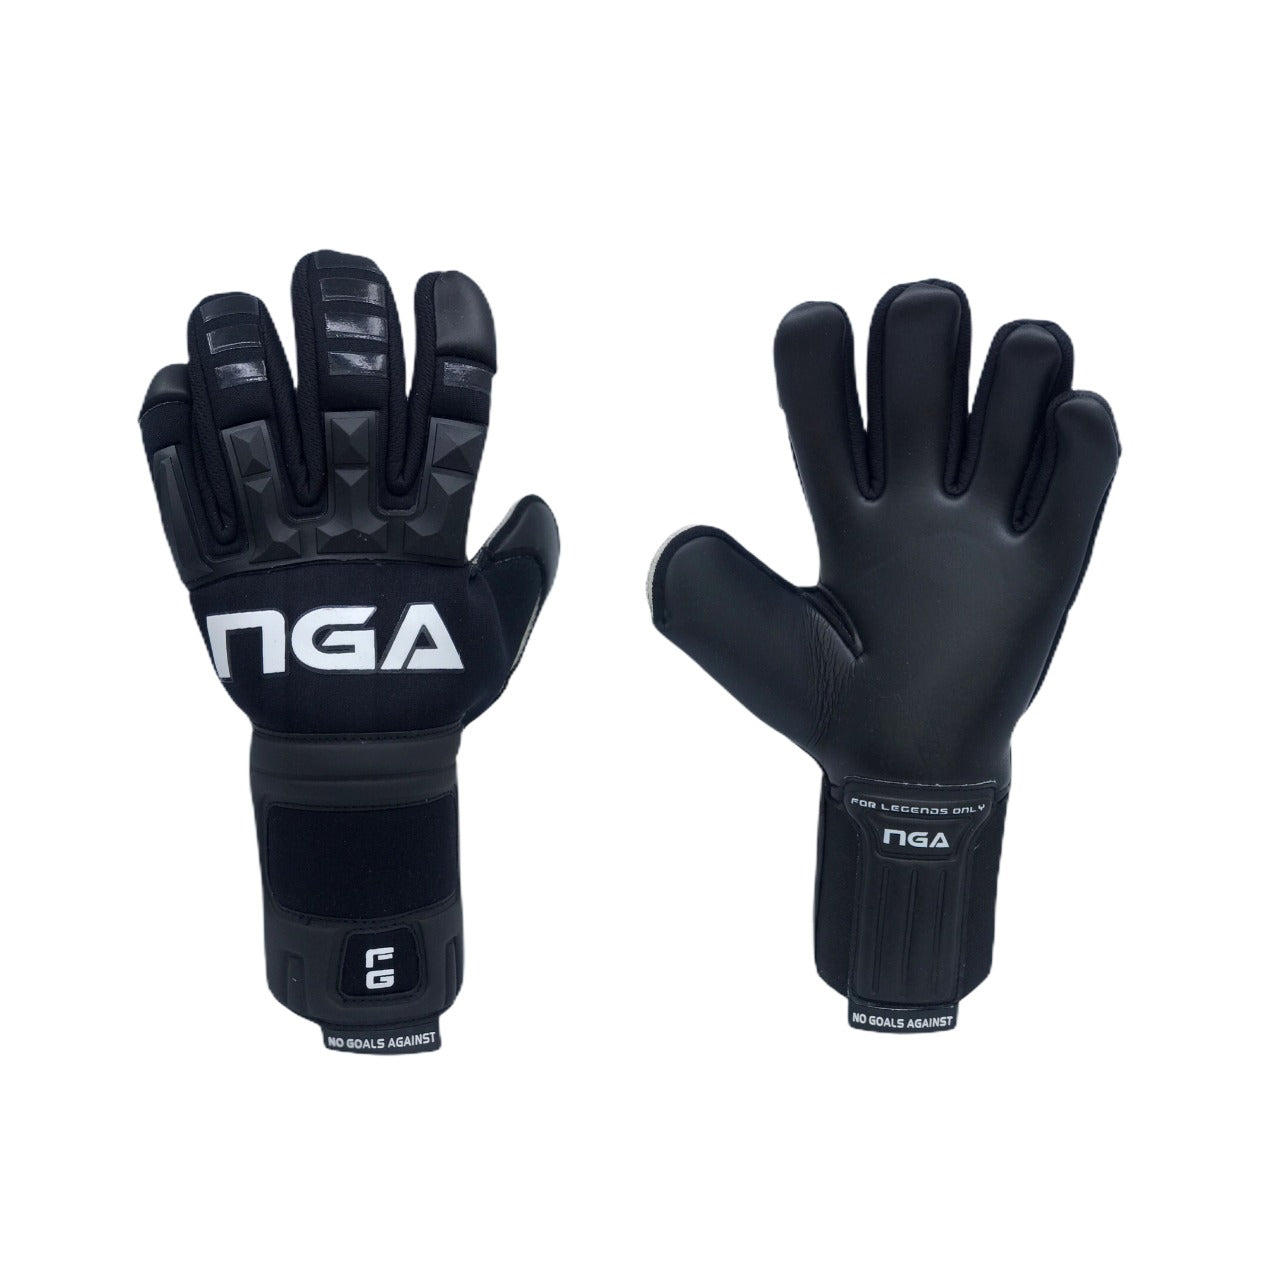 NGA 2020 Legends Blackout Goalkeeper Glove